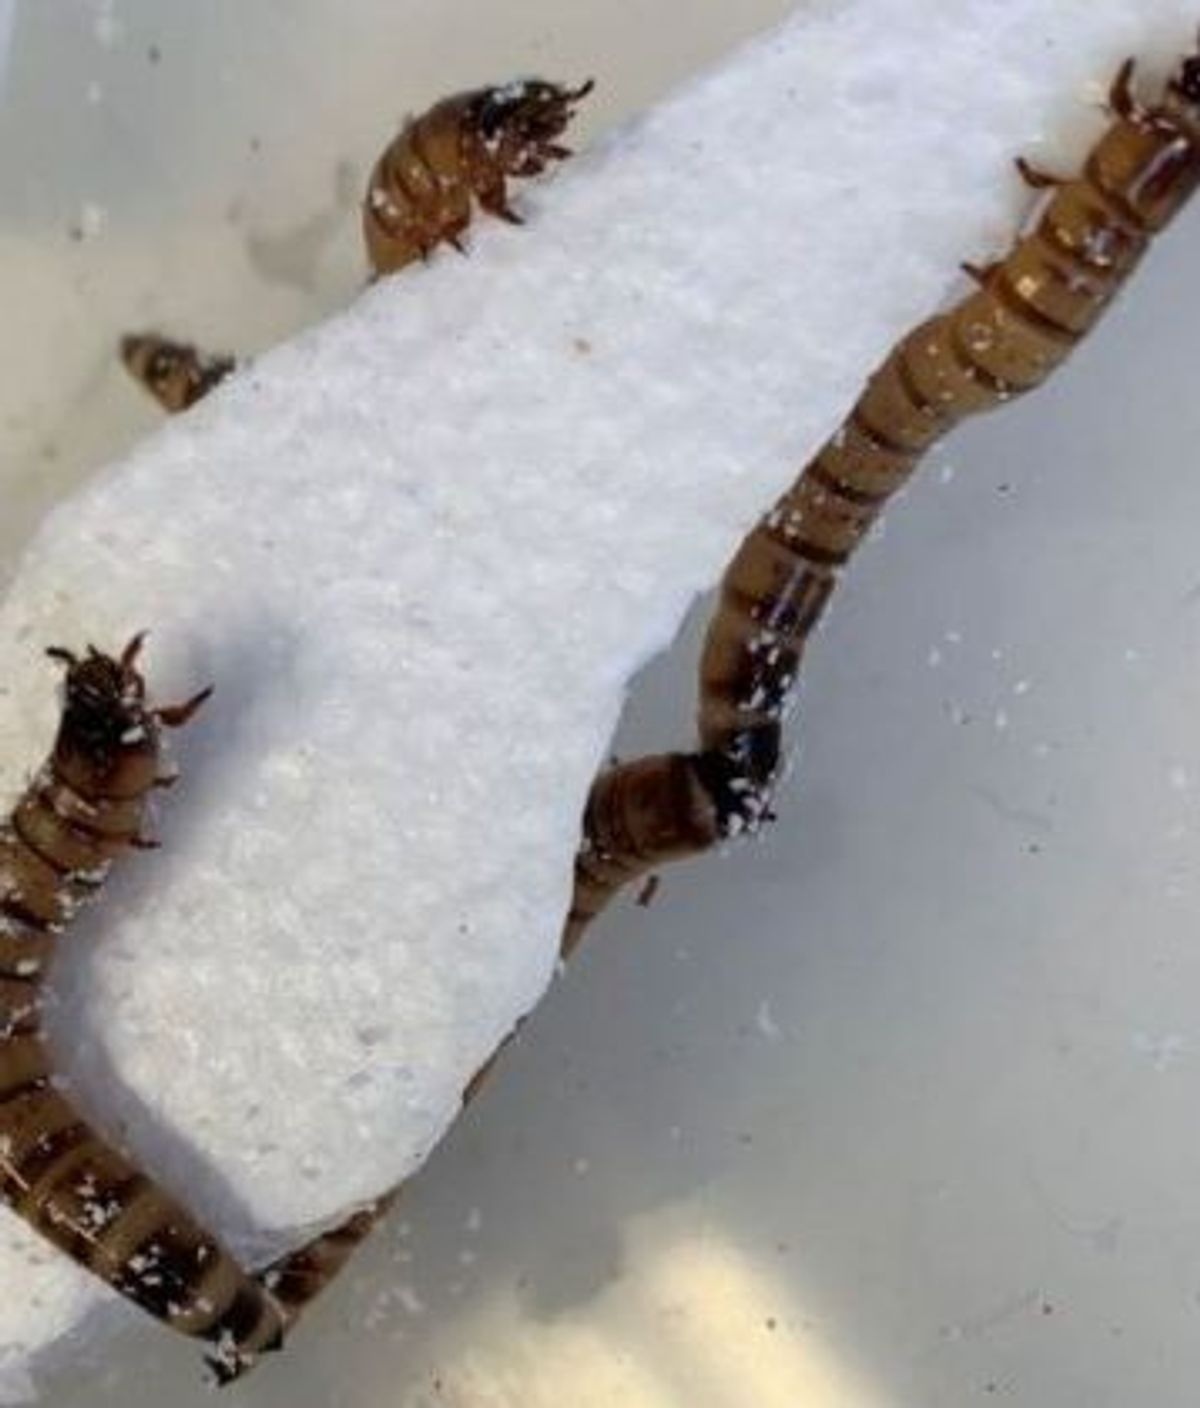 Descubren enormes gusanos capaces de masticar desechos plásticos